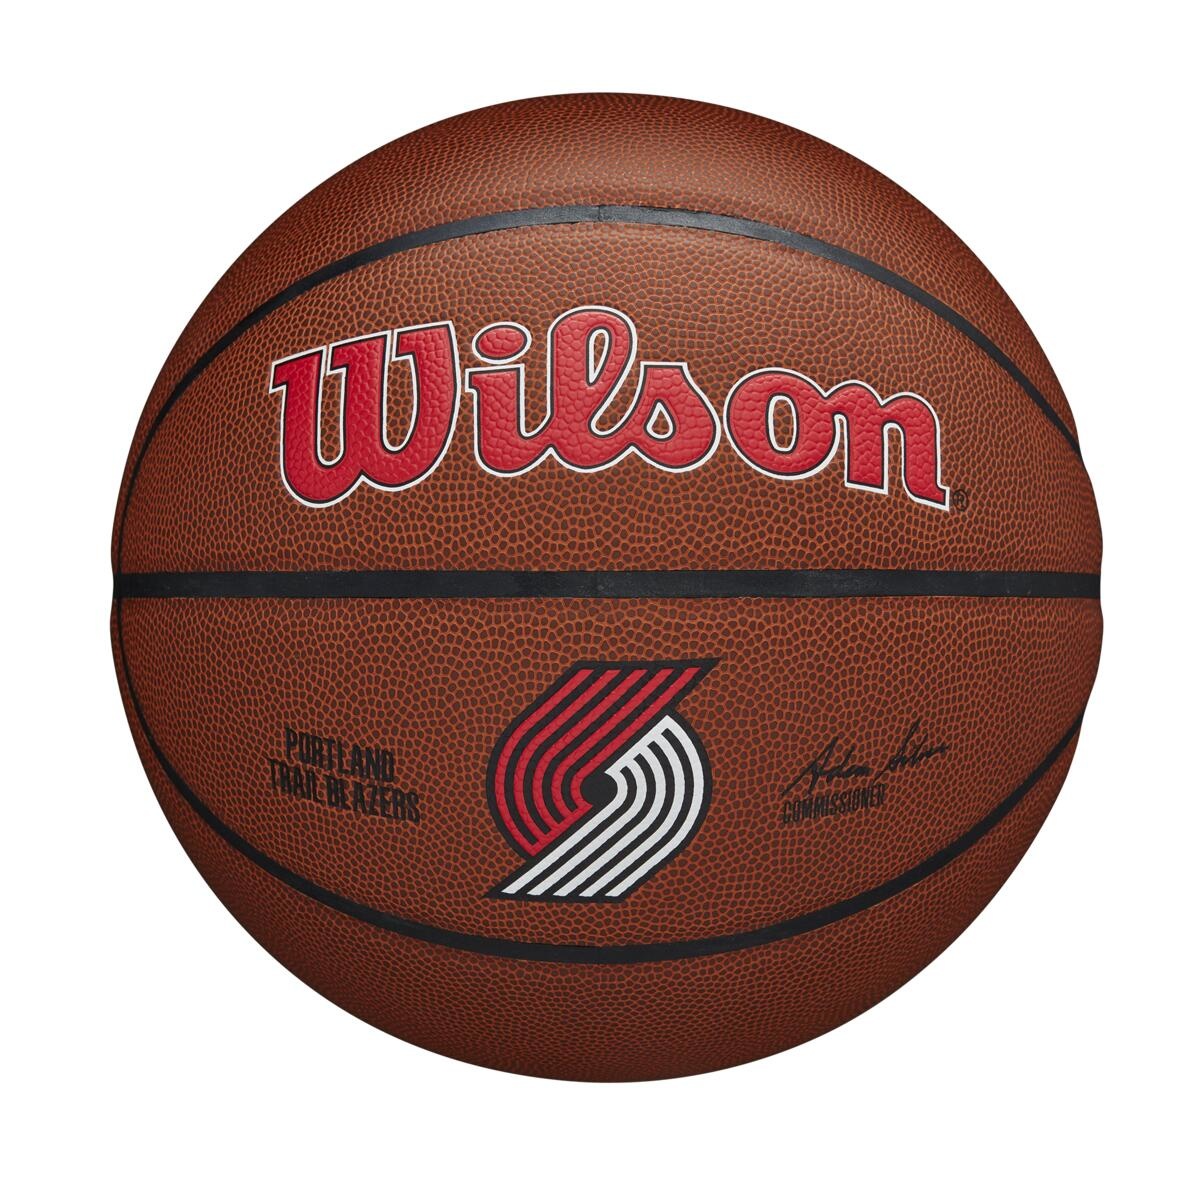 Wilson NBA Team Alliance Trail Blazers - basketbal - rood